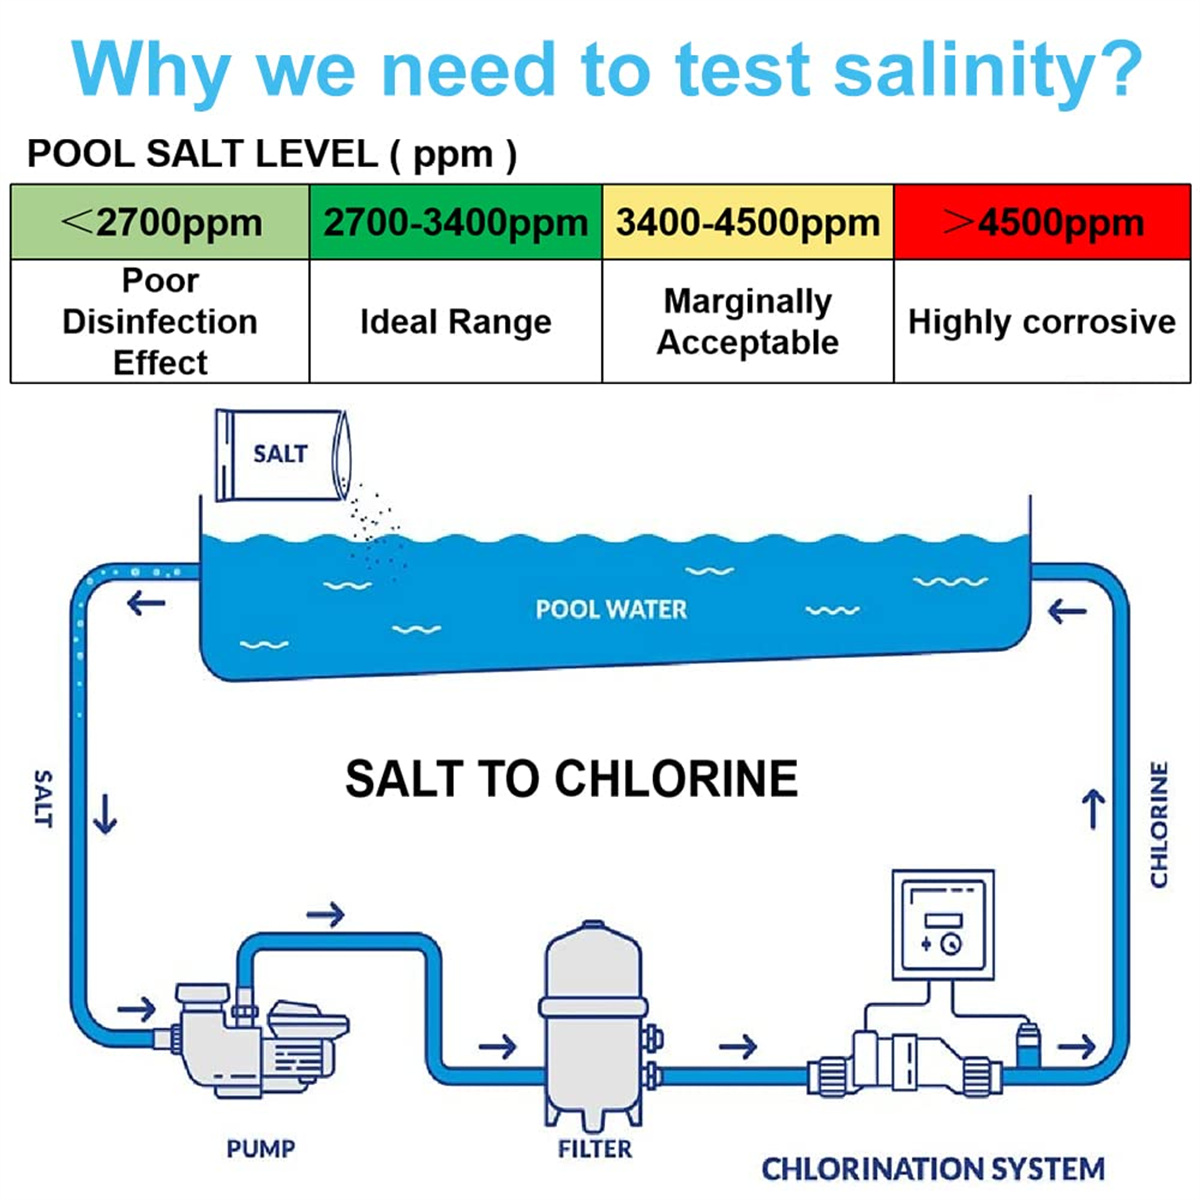 5 in1 Pool Salt Tester Digital Salinity Meter High Accuracy IP67 Waterproof with PPM PPT % Display Auto-Off Energy Efficient for Pools Aquariums Seawater